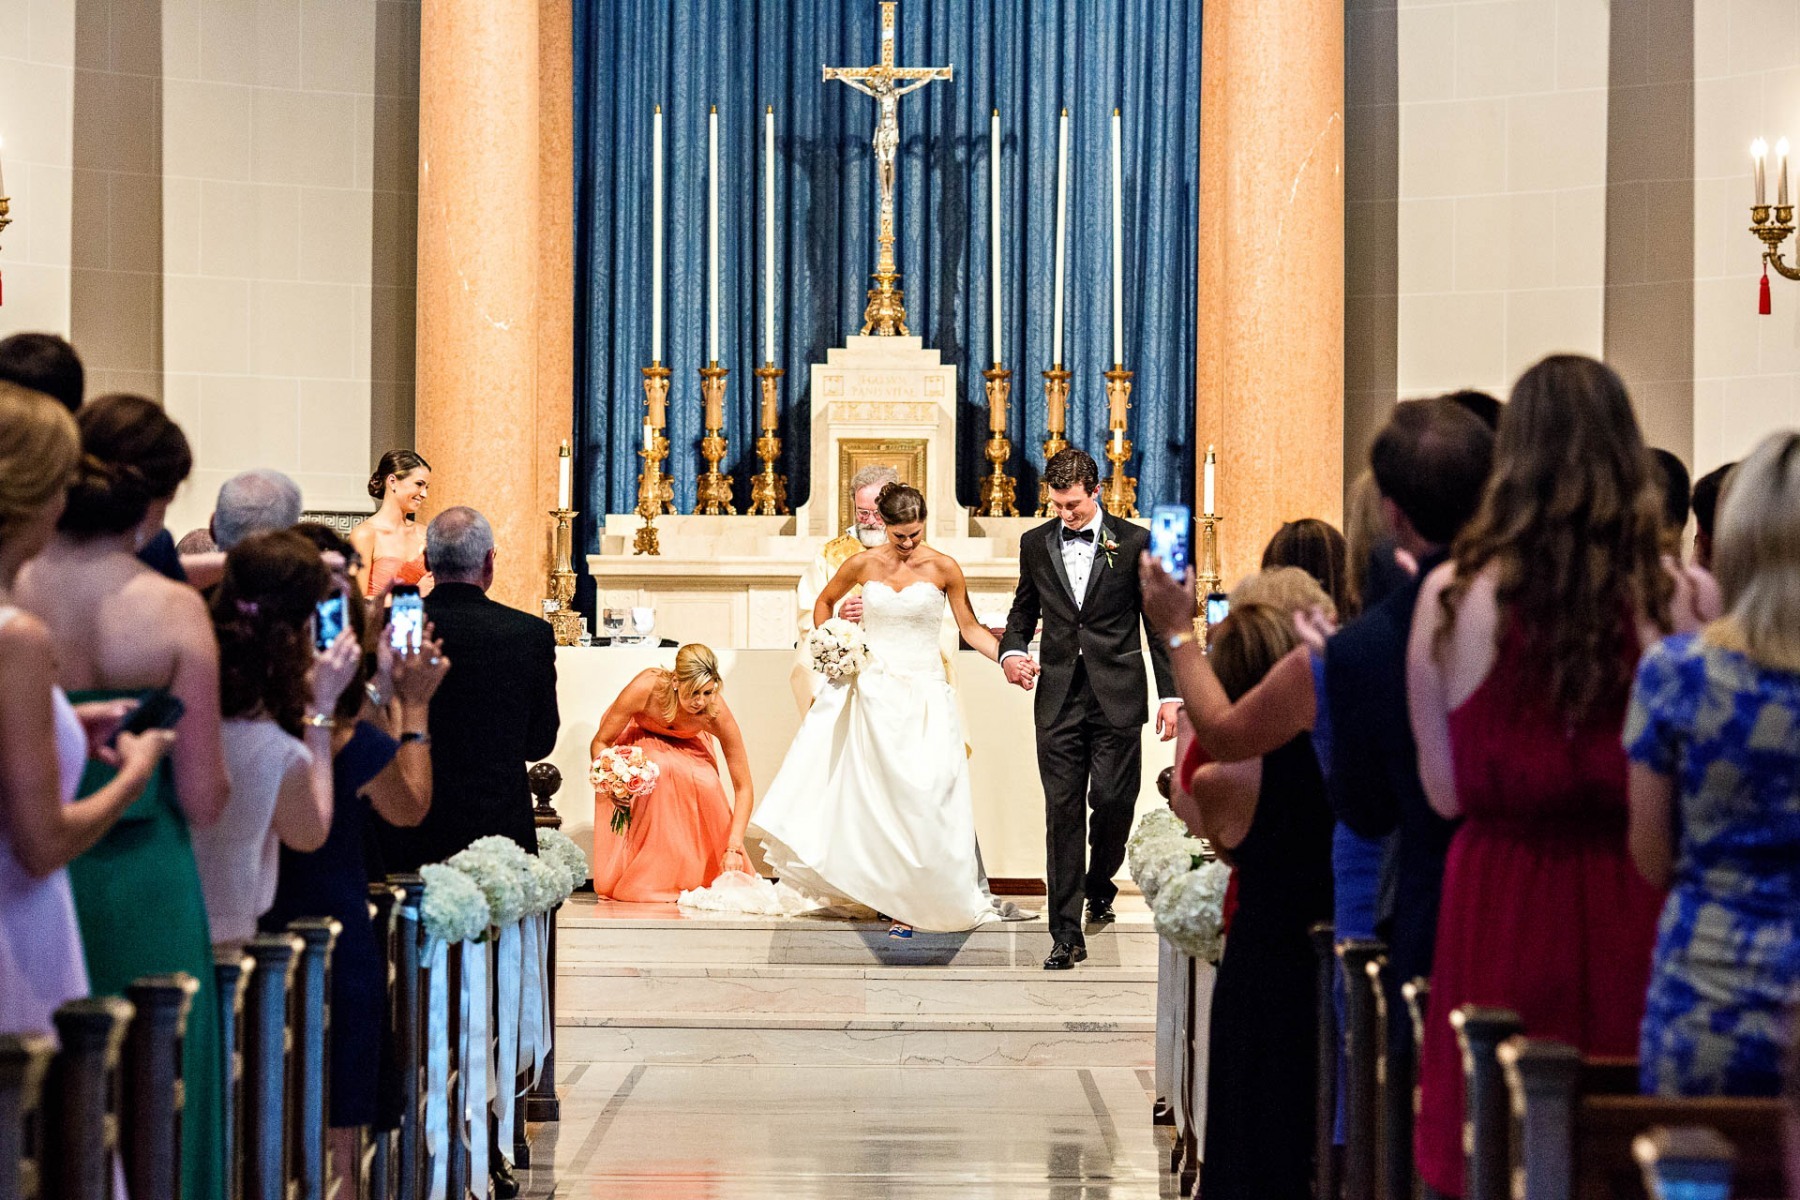 ceremony-complete-bride-groom-aisle